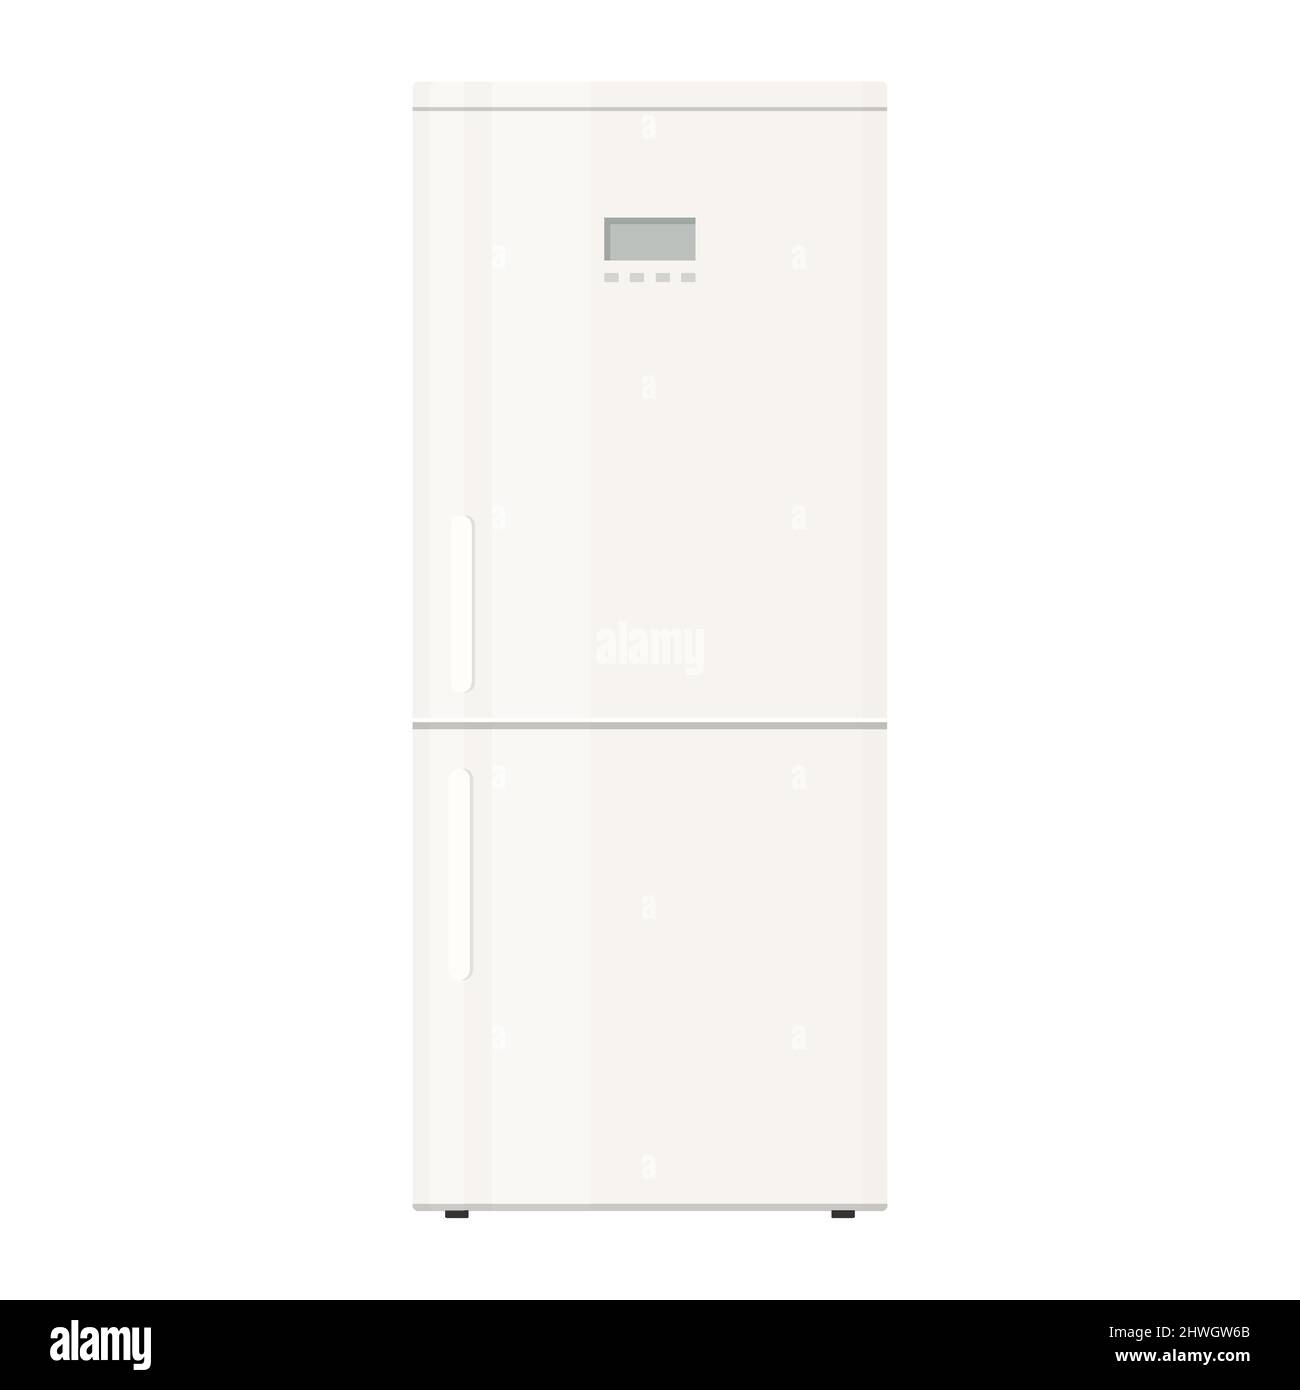 White Refrigerator isolated on white background. Fridge kitchen appliances vector illustration. Flat design Stock Vector